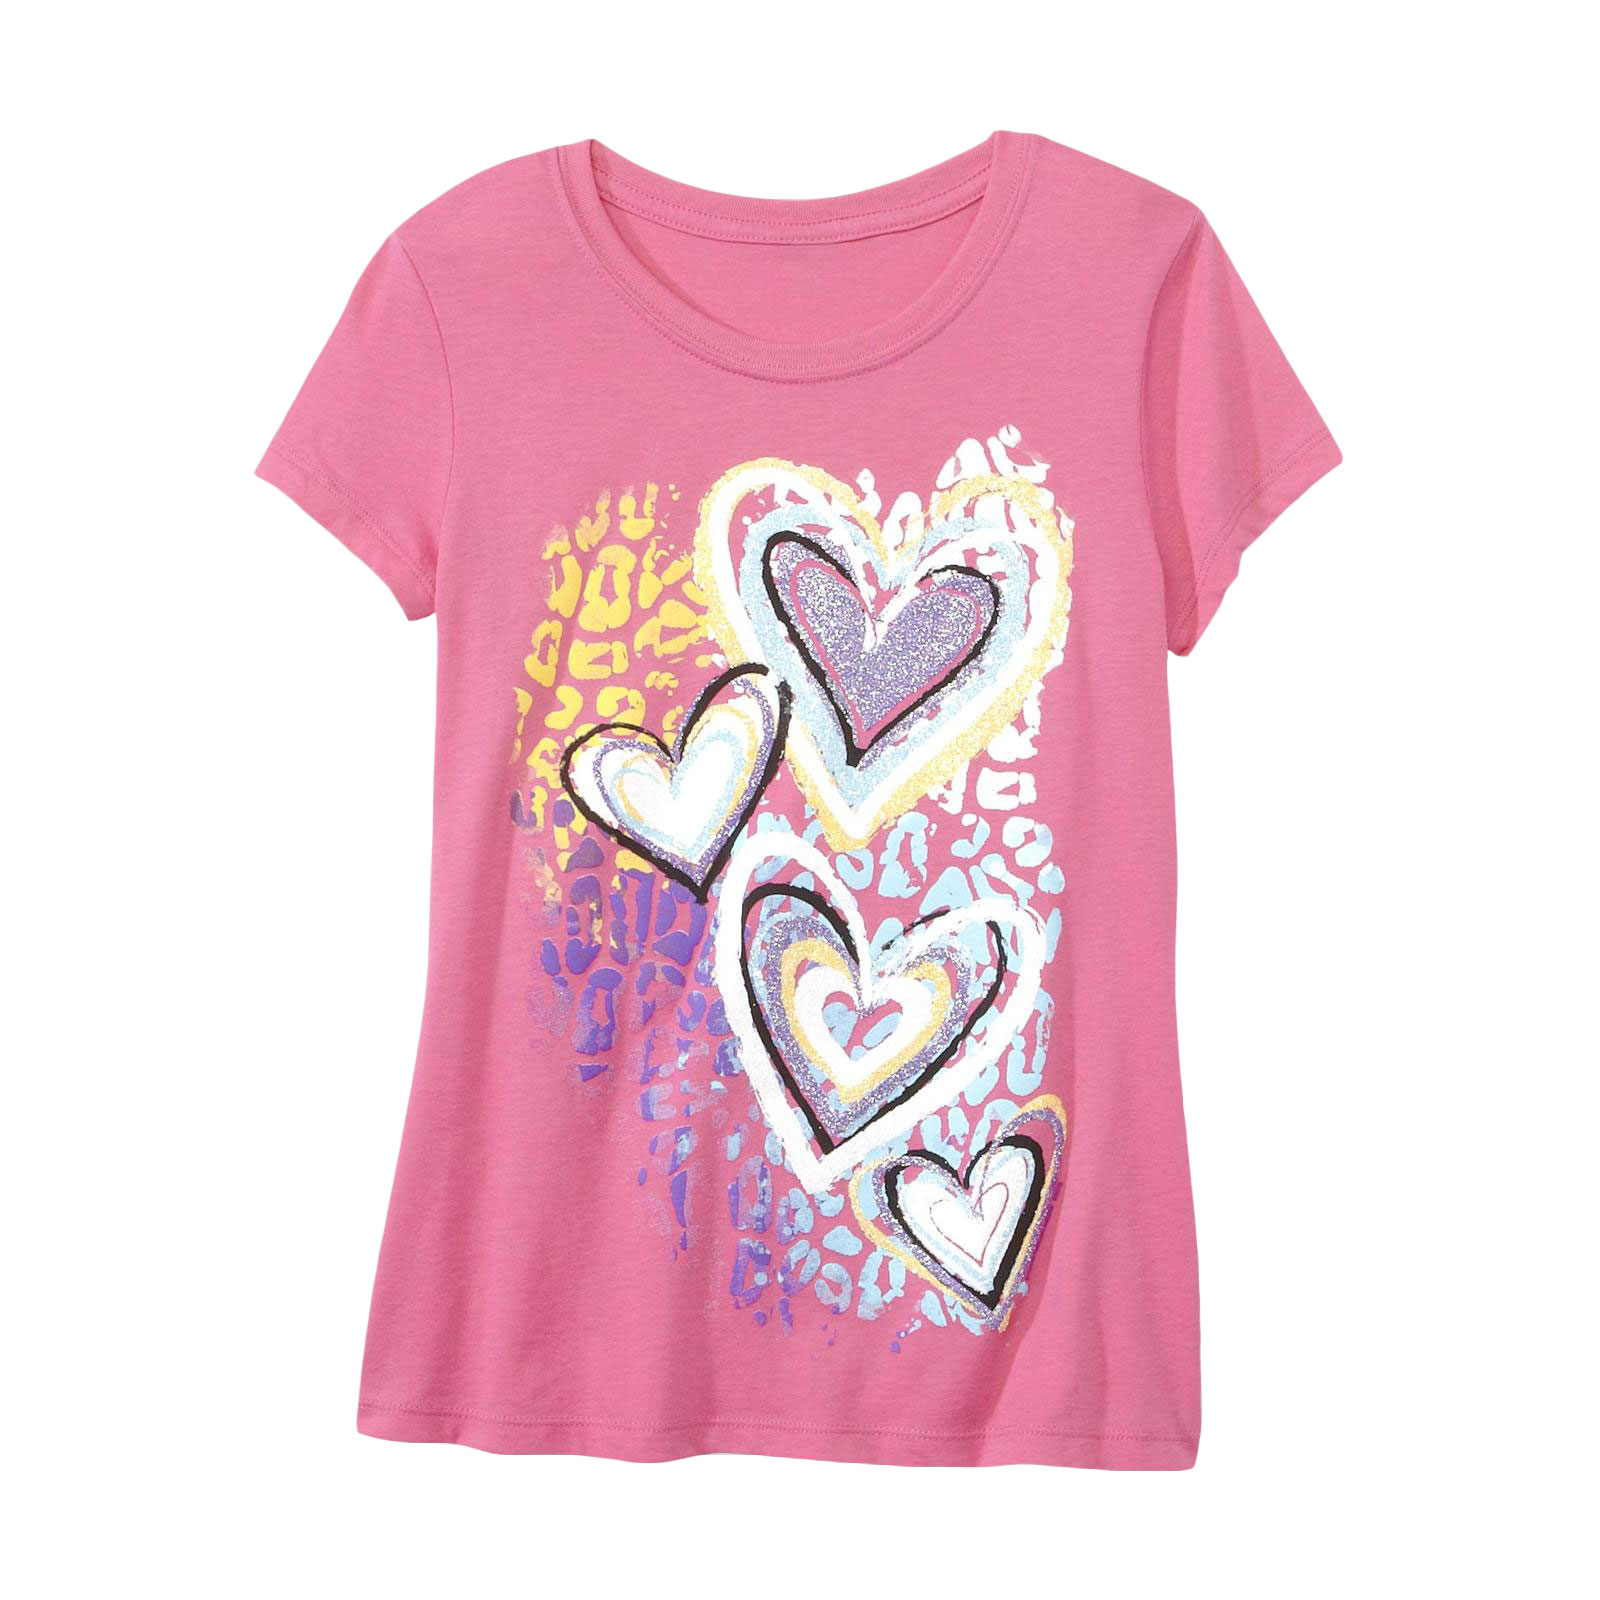 Hybrid Girl's Graphic T-Shirt - Rainbow Hearts